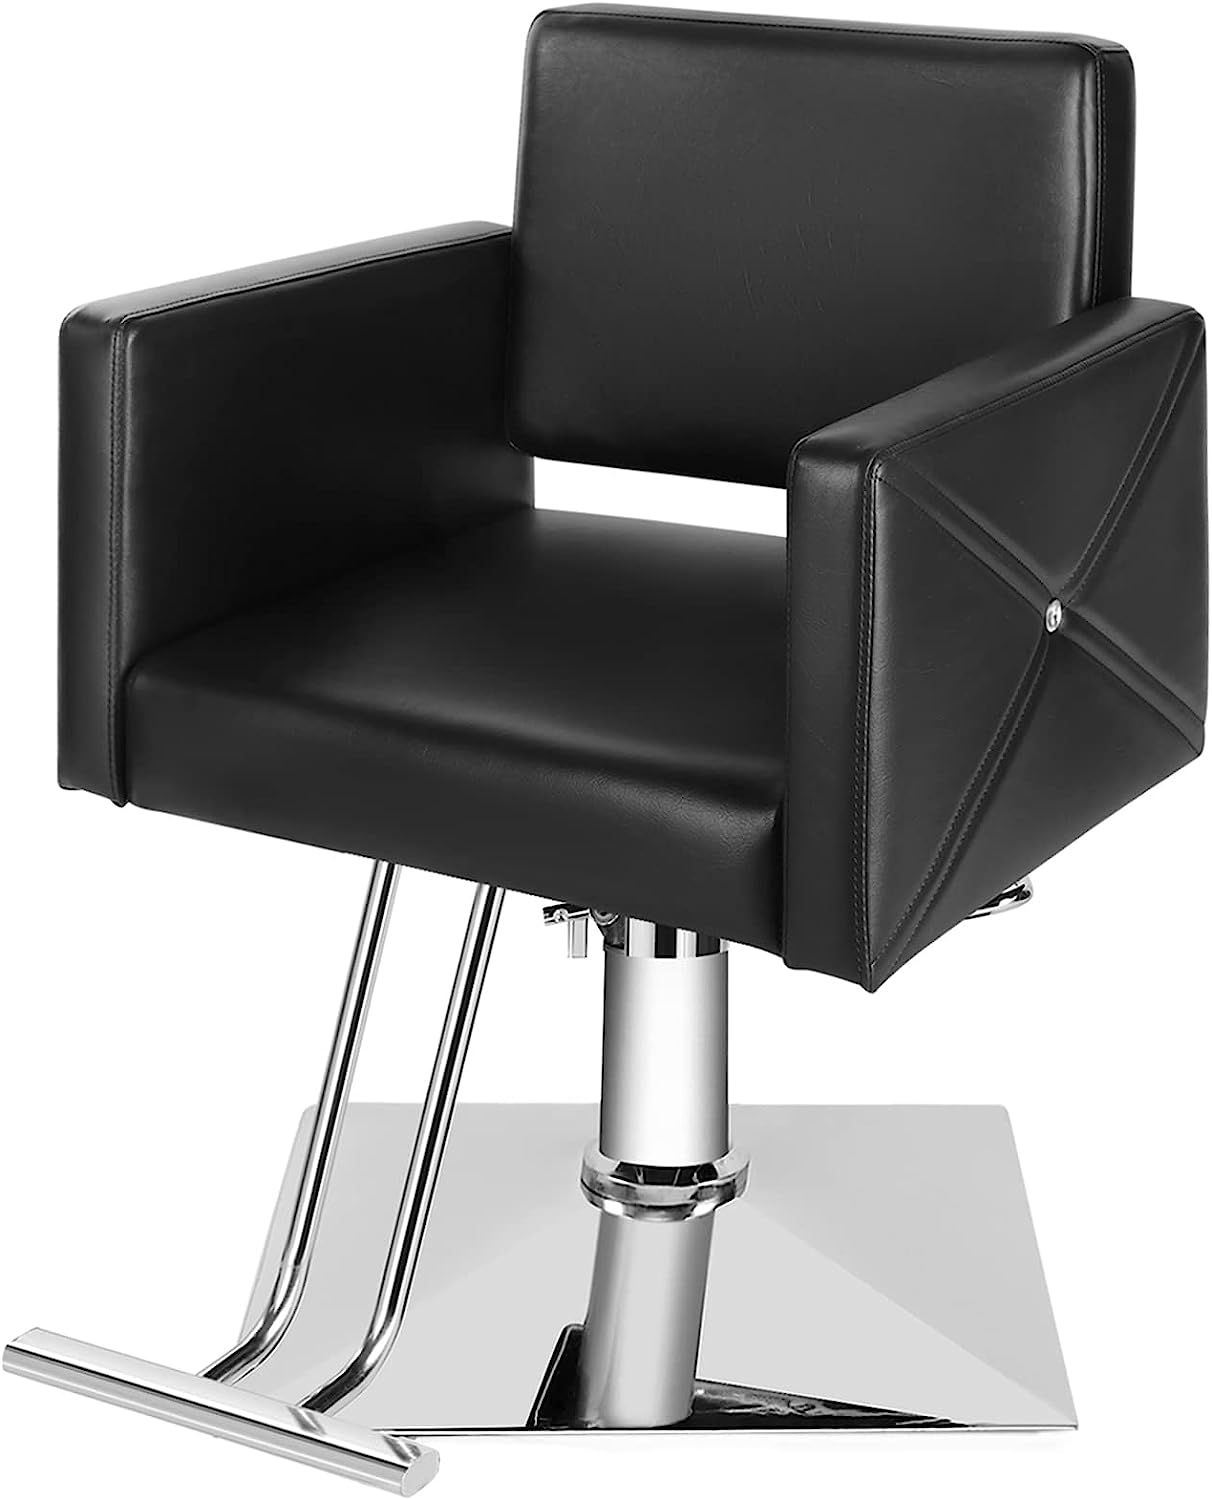 Artist hand Salon Chair for Hair Stylist, Stylist [...]